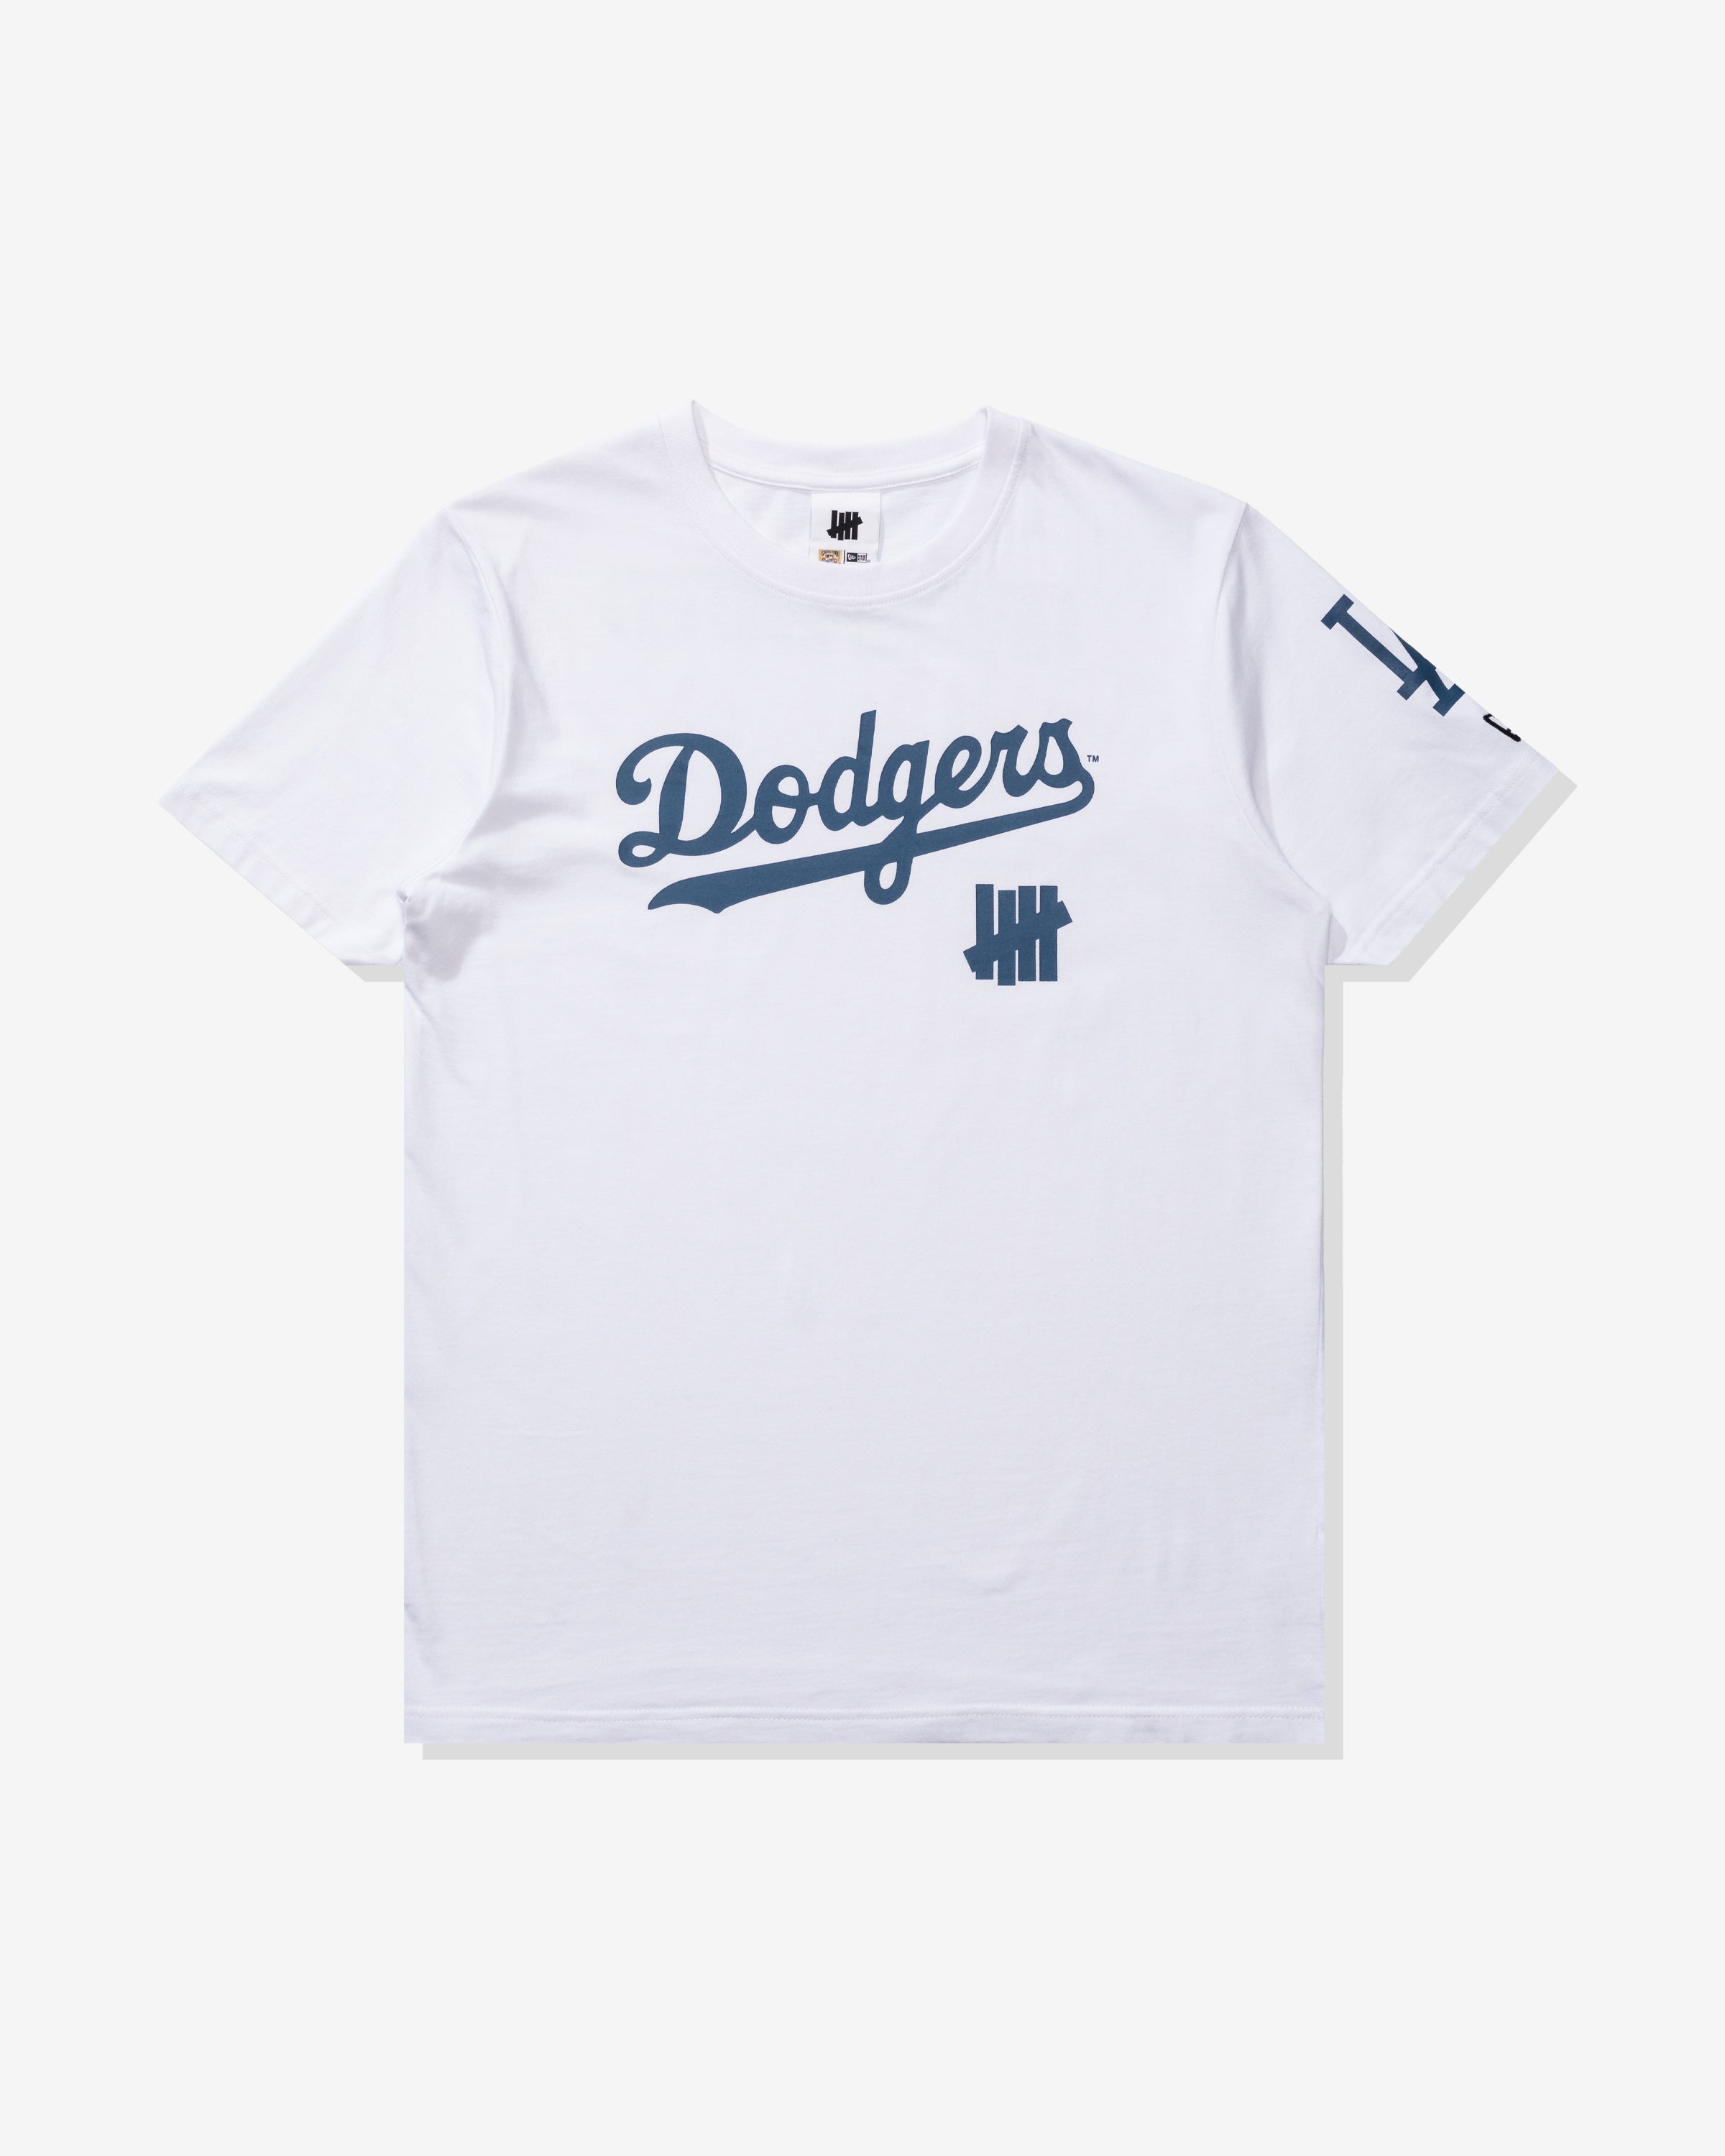 [Preorder]Undefeated x La Dodgers New Era Champions Tshirt